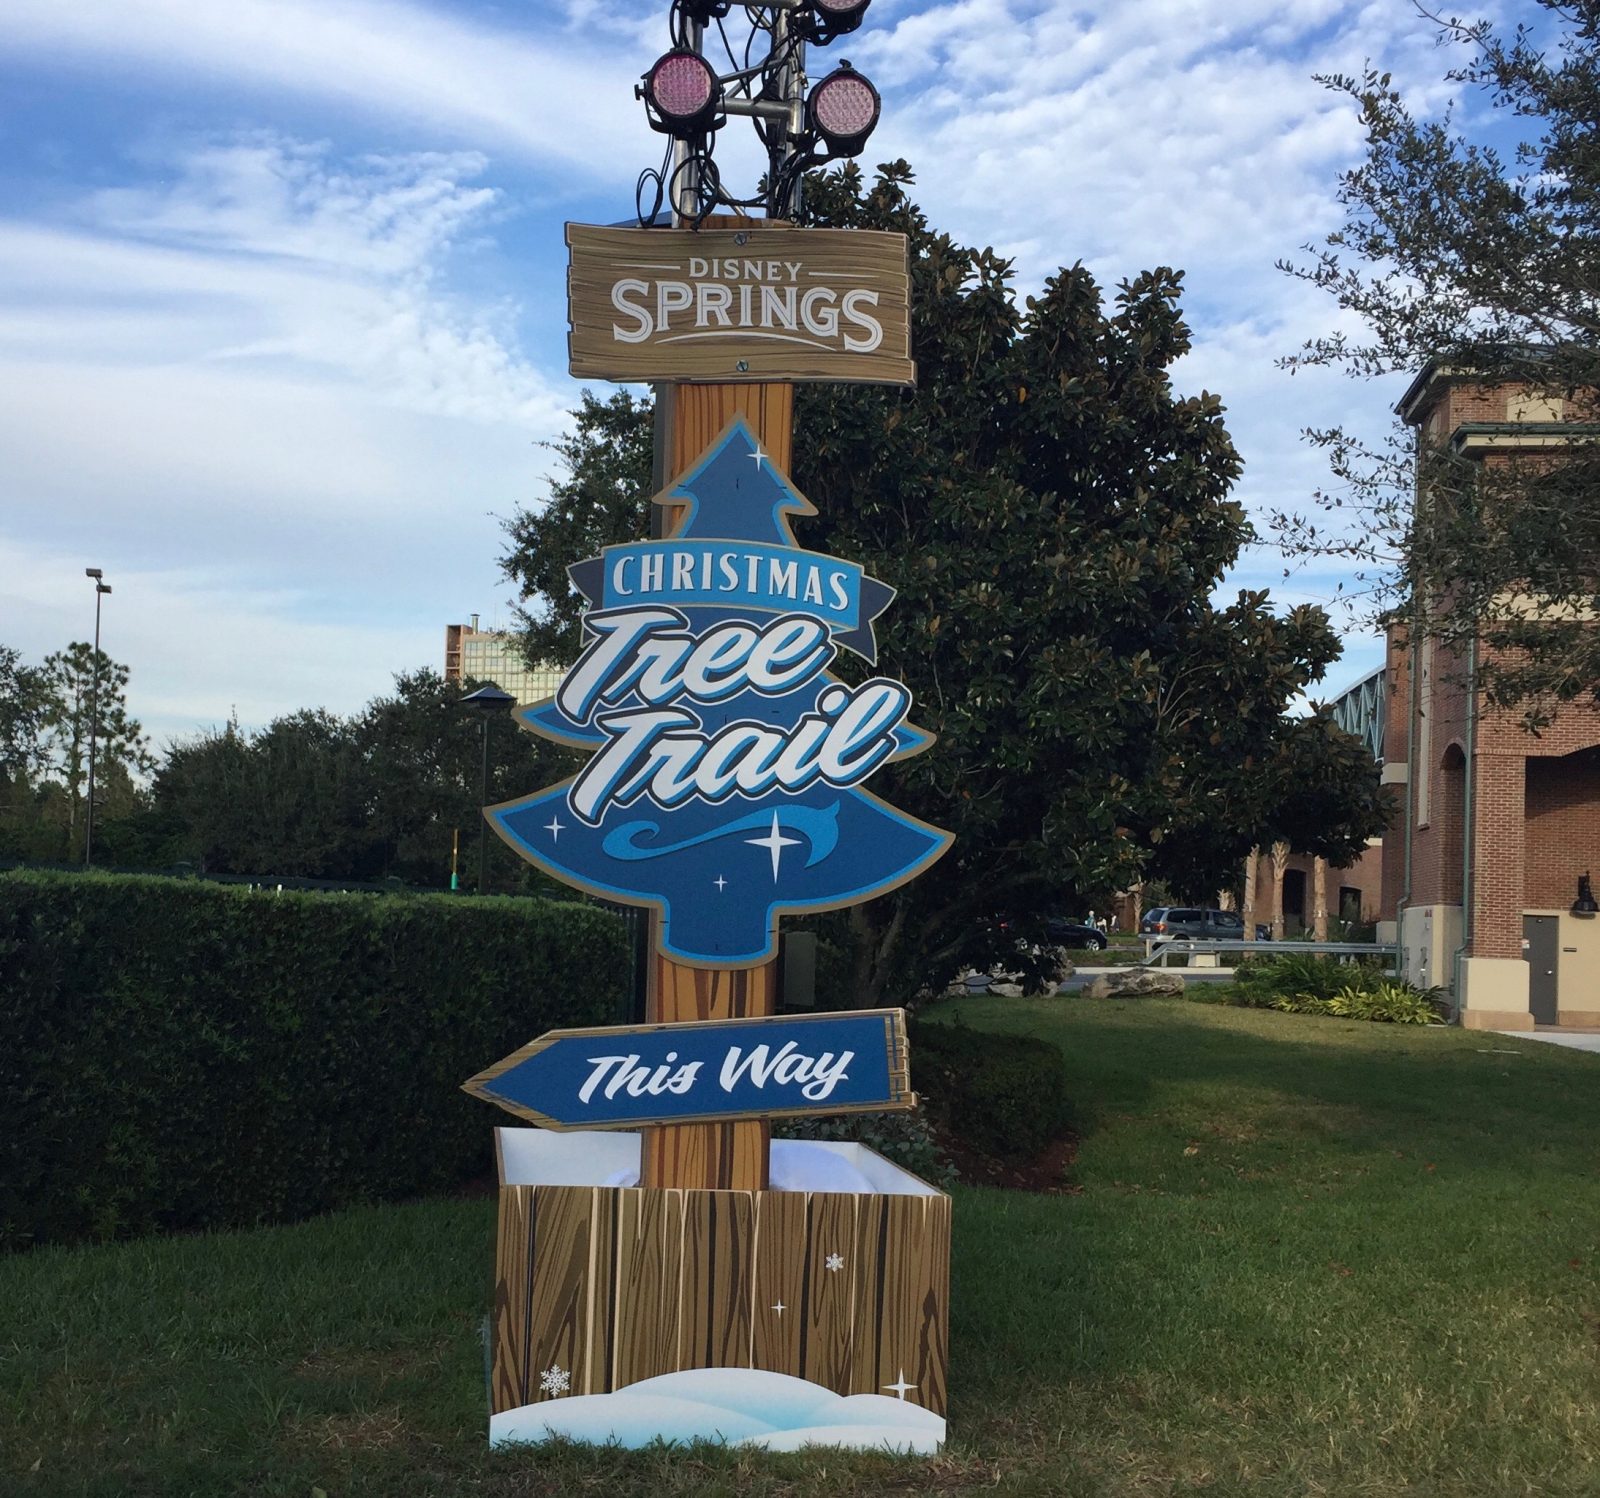 Christmas Tree Trail Disney Springs 2016 - 